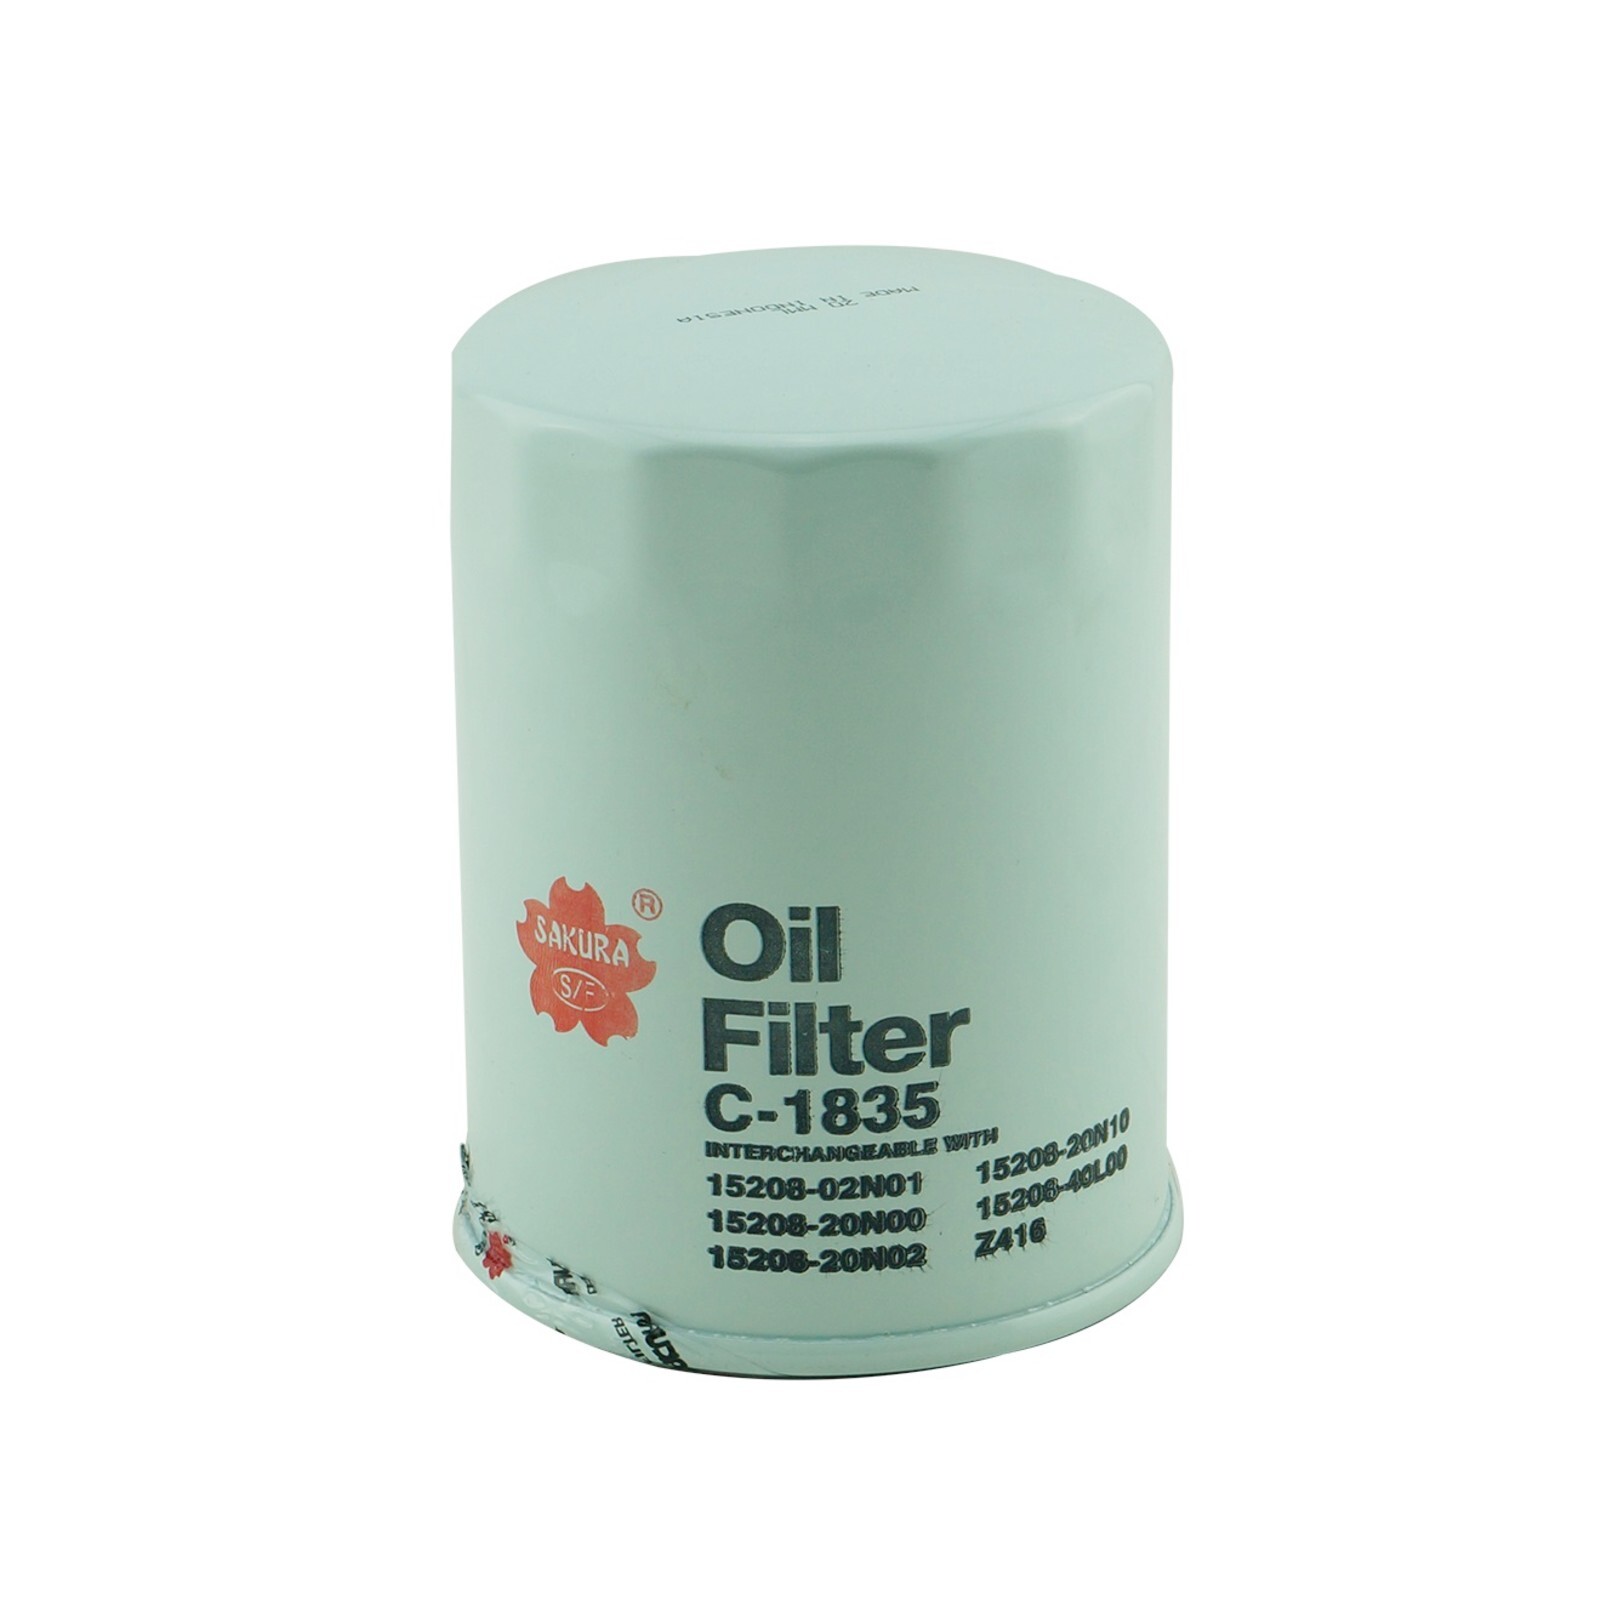 C-1835 Sakura Oil Filter - Fits Nissan + Many More